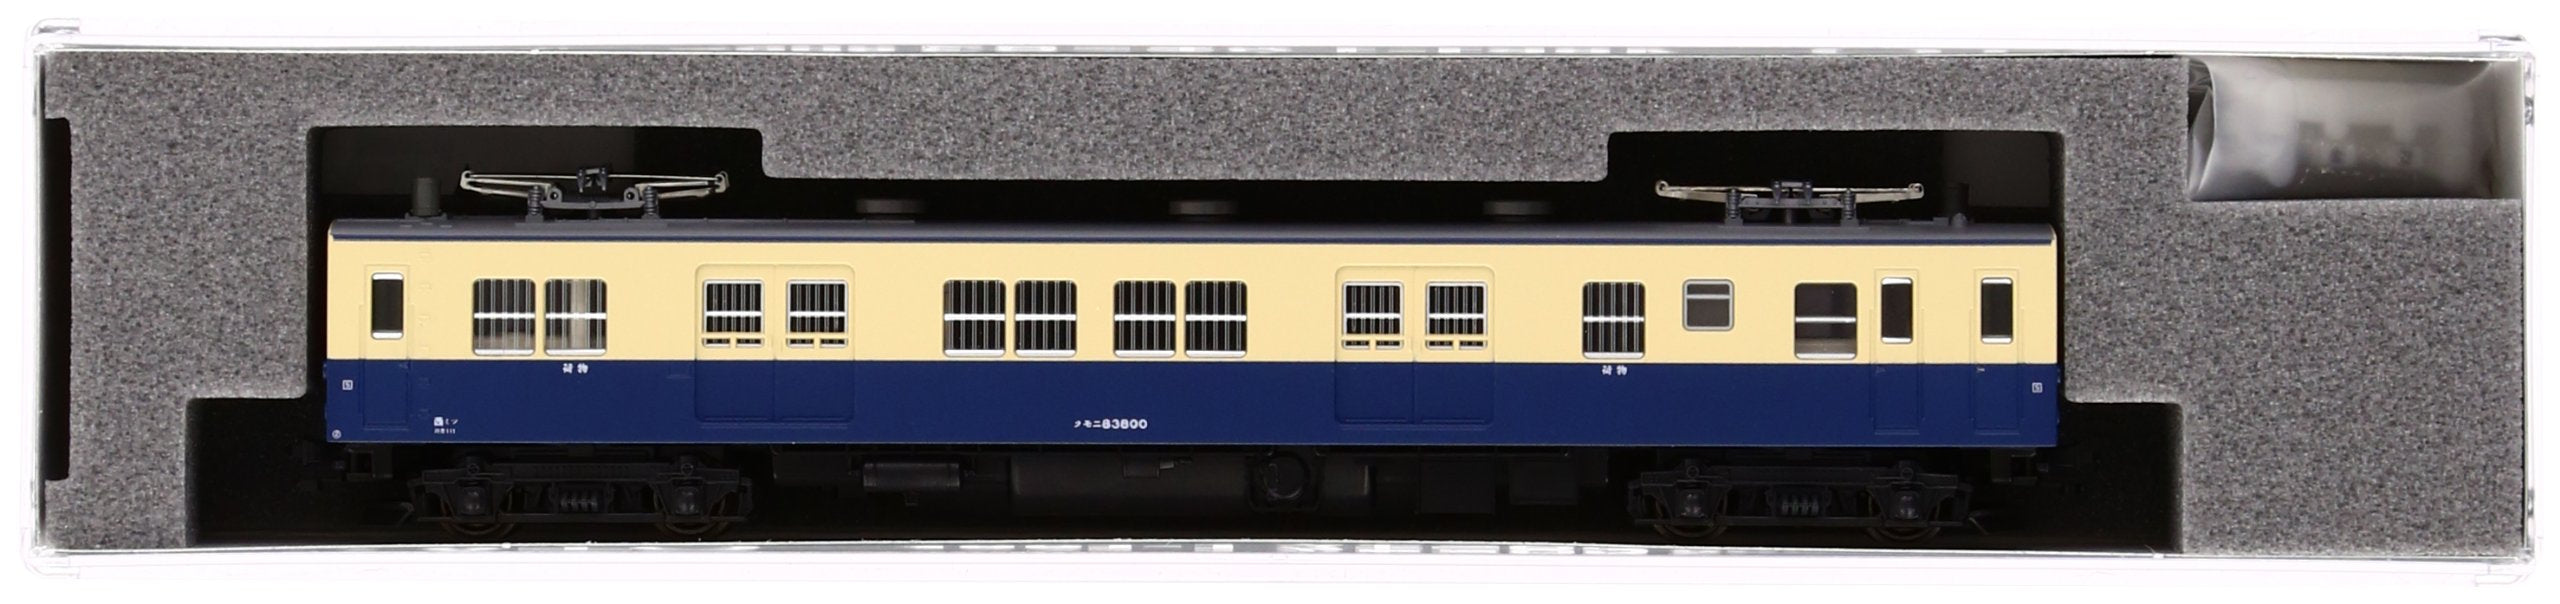 Kato N Gauge Yokosuka Color M 4861-1 Railway Model Train Series Kumoni 83 800